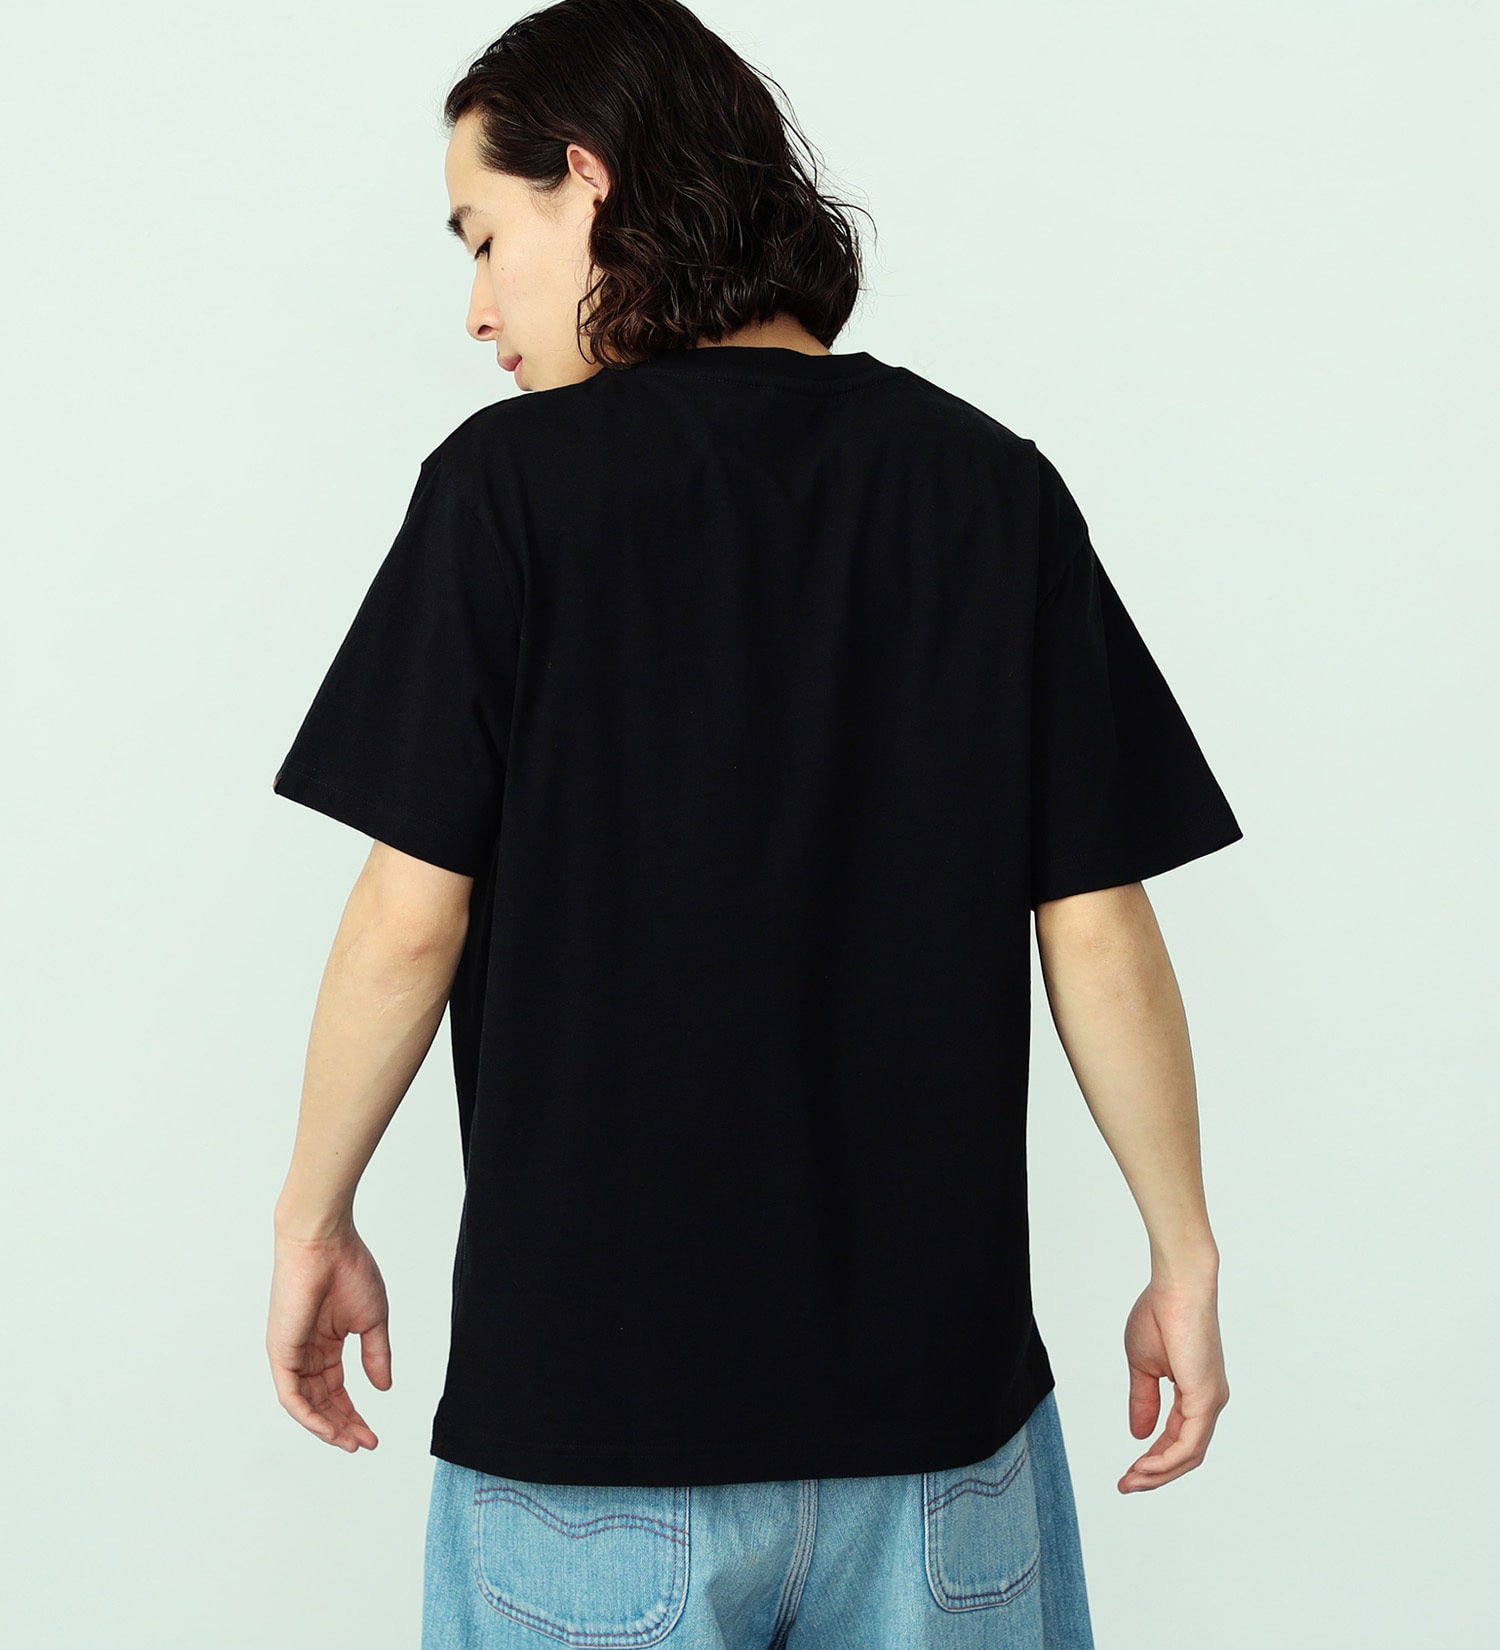 ALPHA(アルファ)の【大きいサイズ】AマークロゴプリントTシャツ 半袖 (グリーンフロッグスキンカモ)|トップス/Tシャツ/カットソー/メンズ|ブラック